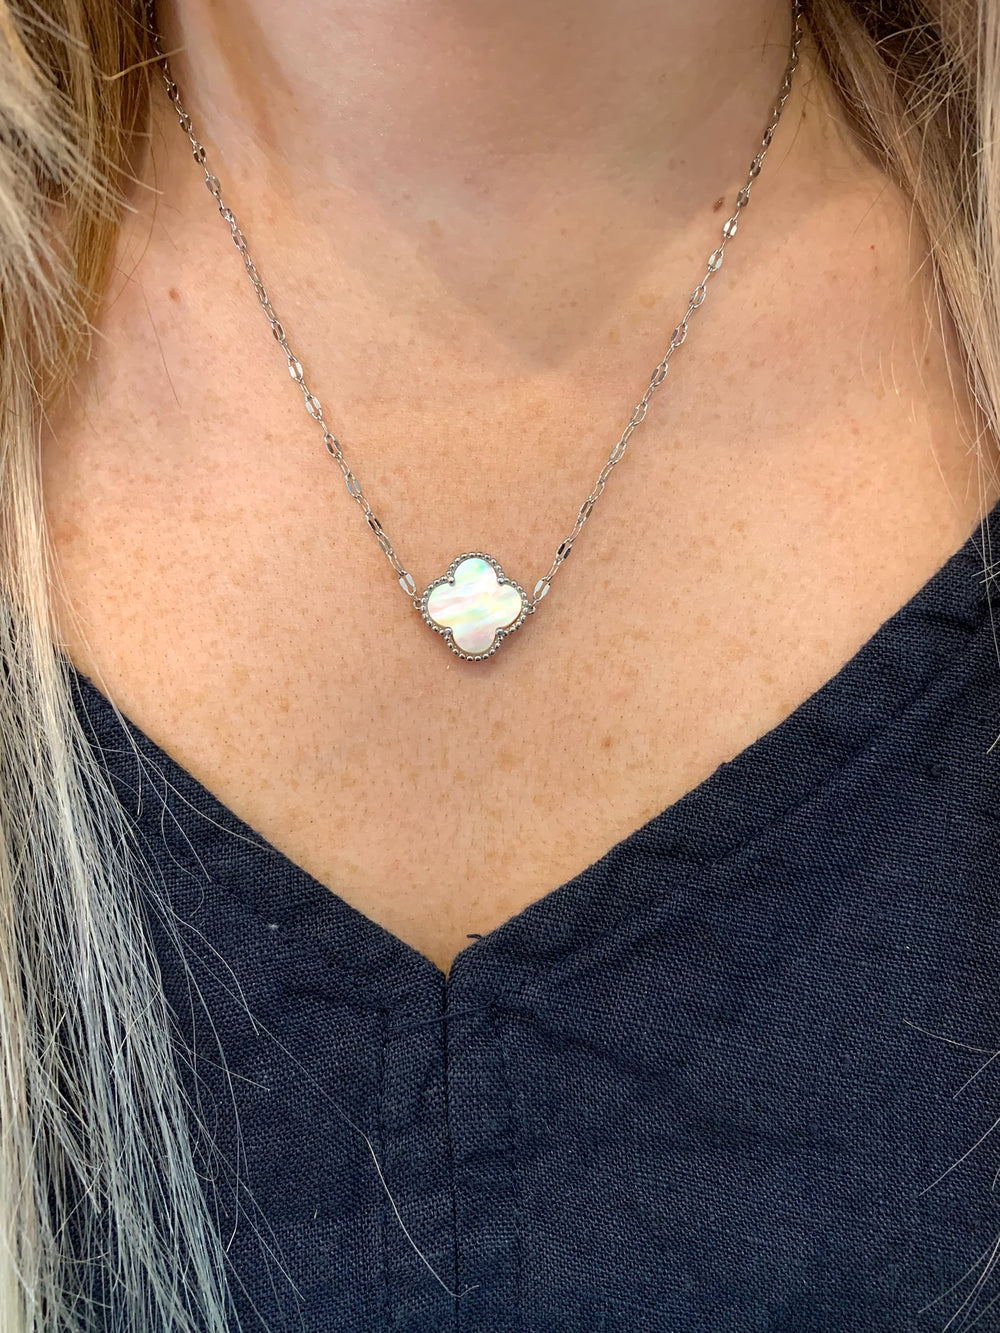 Avery necklace silver on model. 